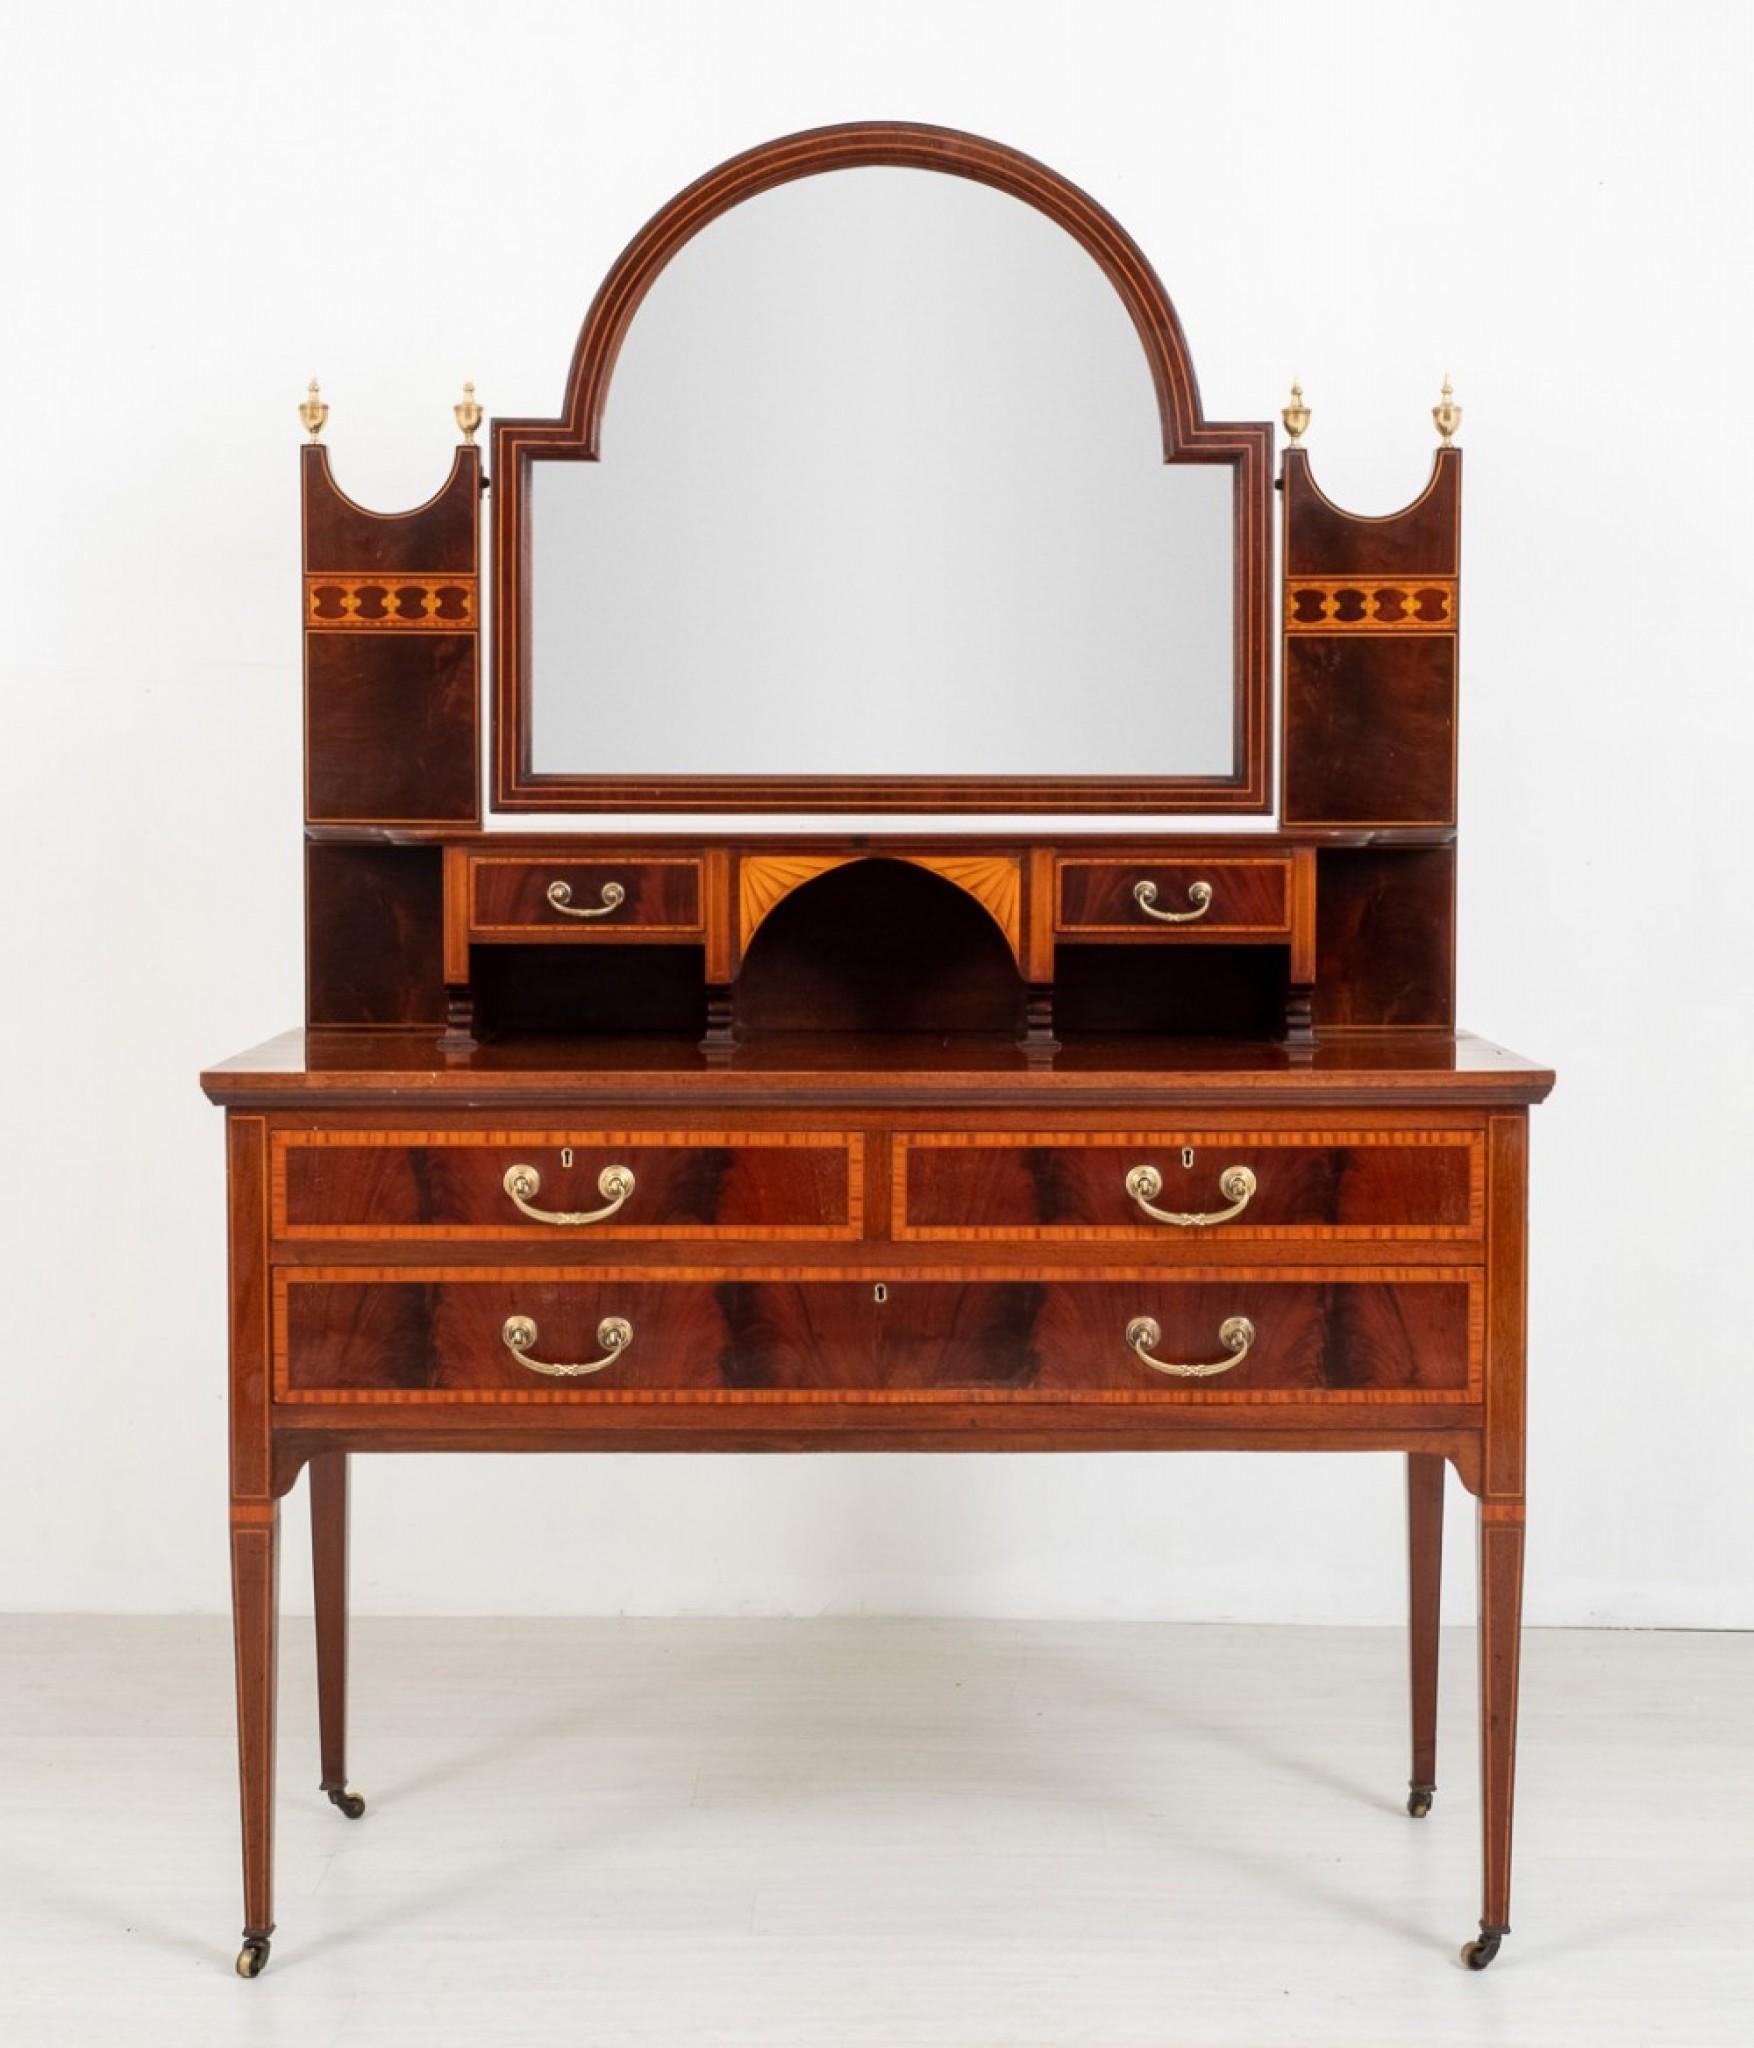 Late 19th Century Sheraton Revival Dresser Desk, Antique Mahogany Furniture, 1890